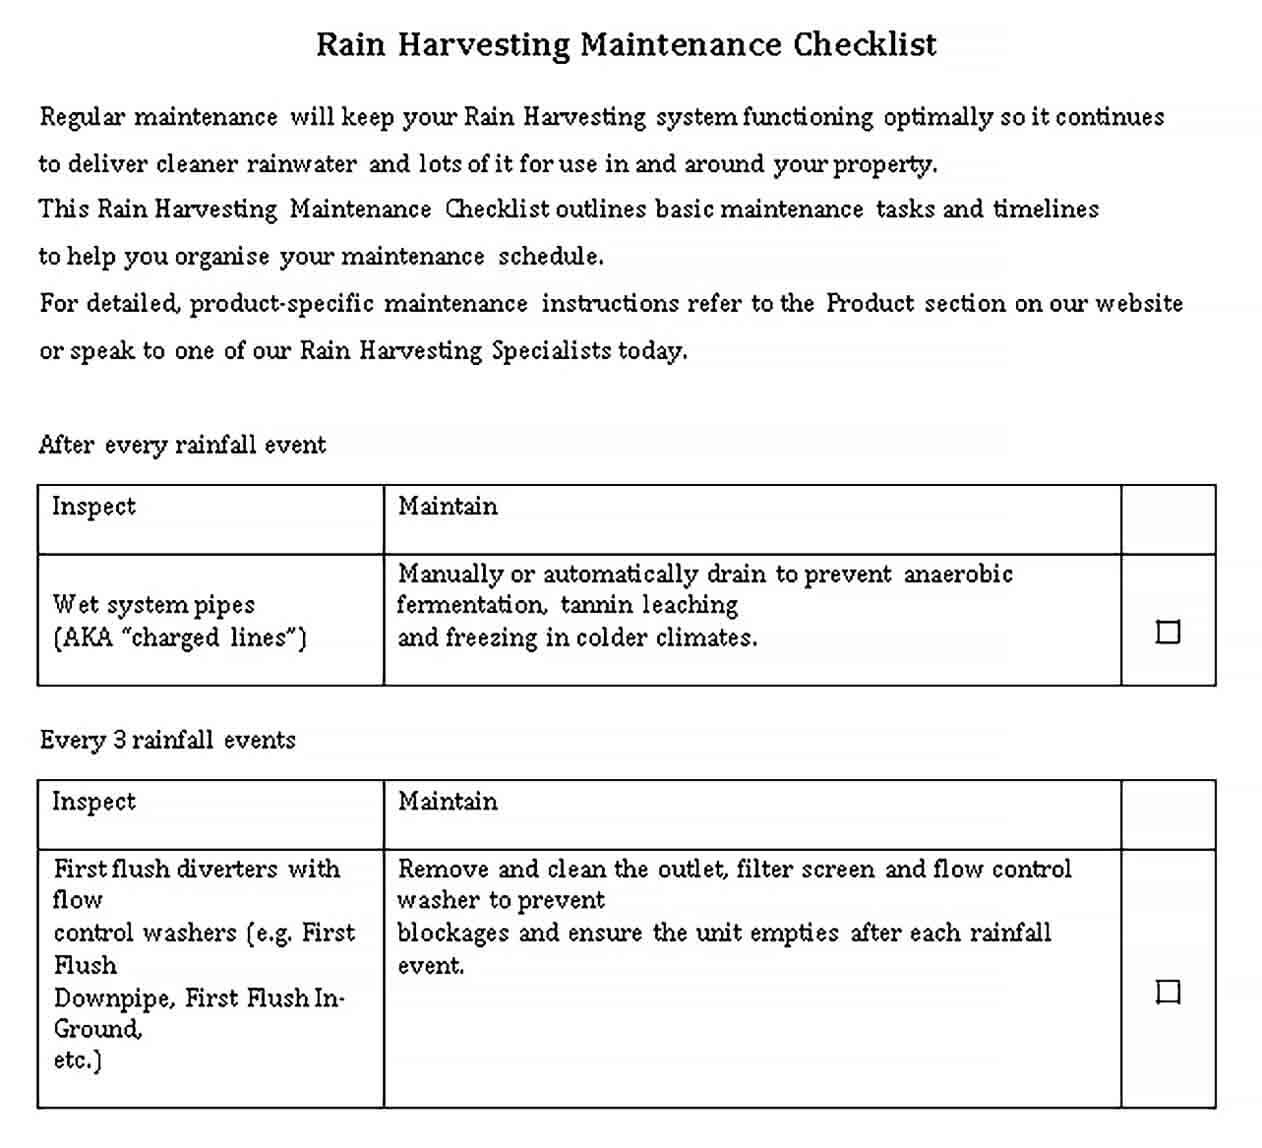 Sample Rain Harvesting Maintenance Checklist Template